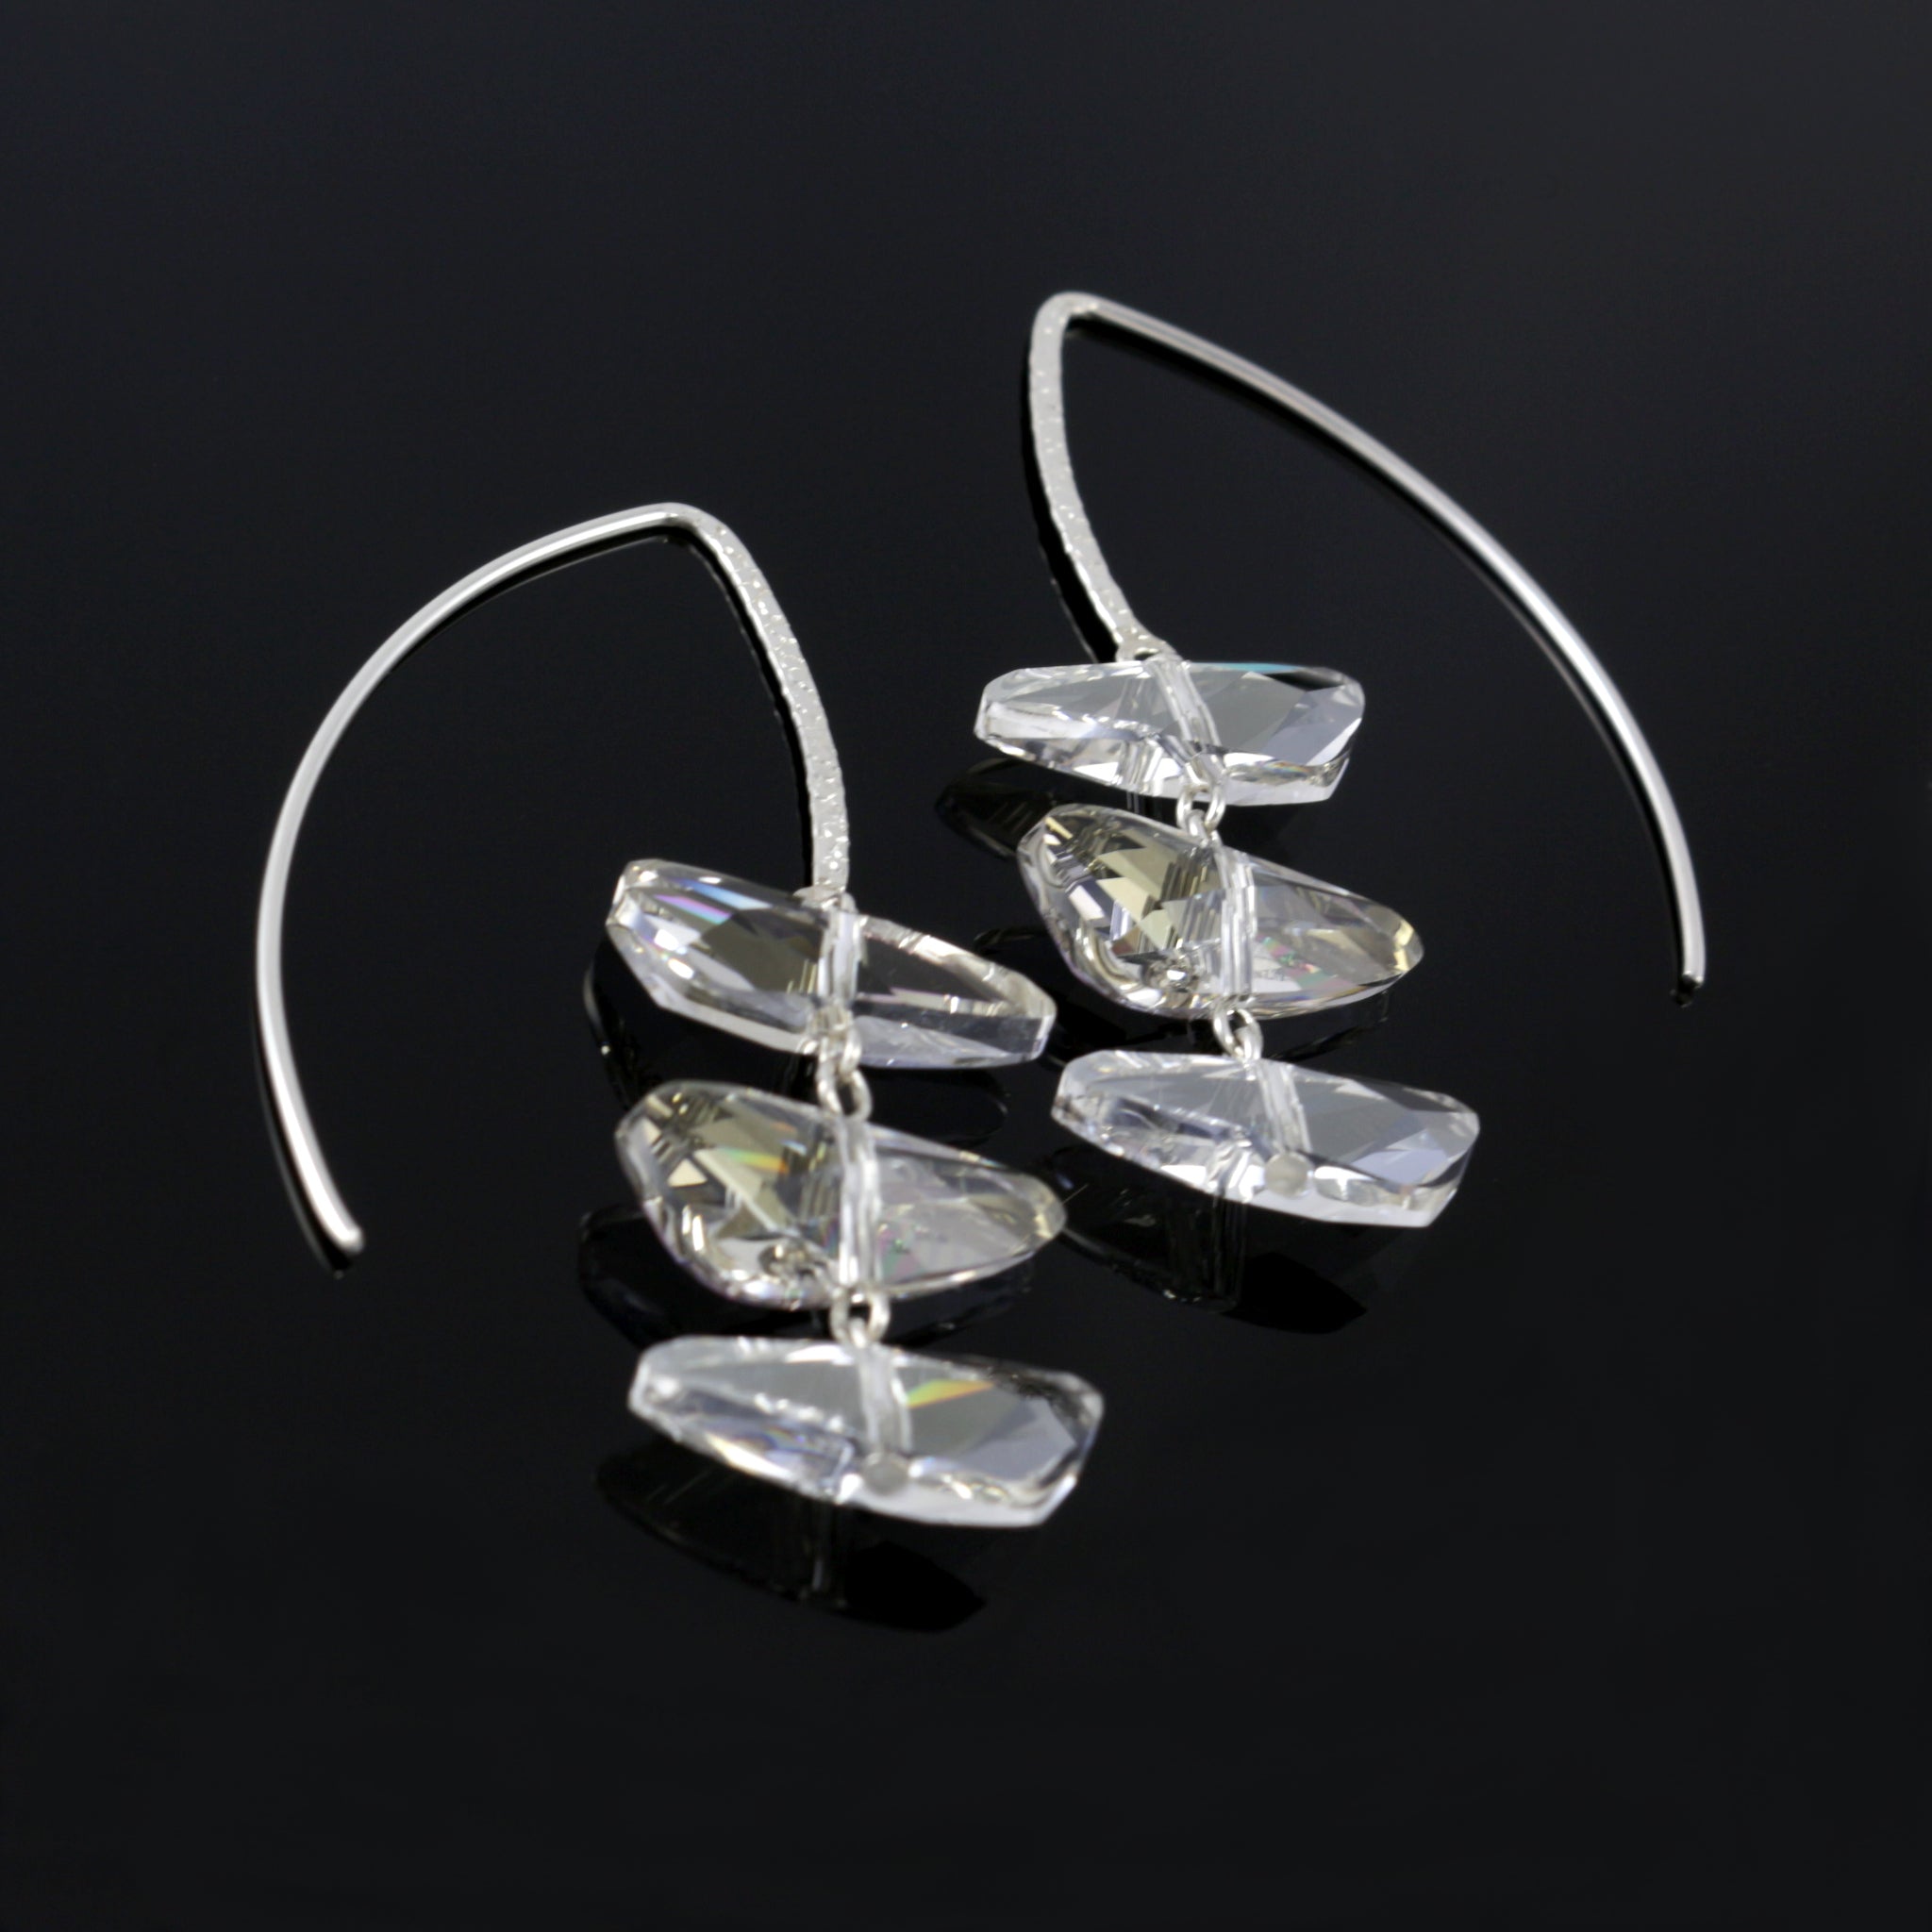 Reflections Earrings in Silver Shimmer